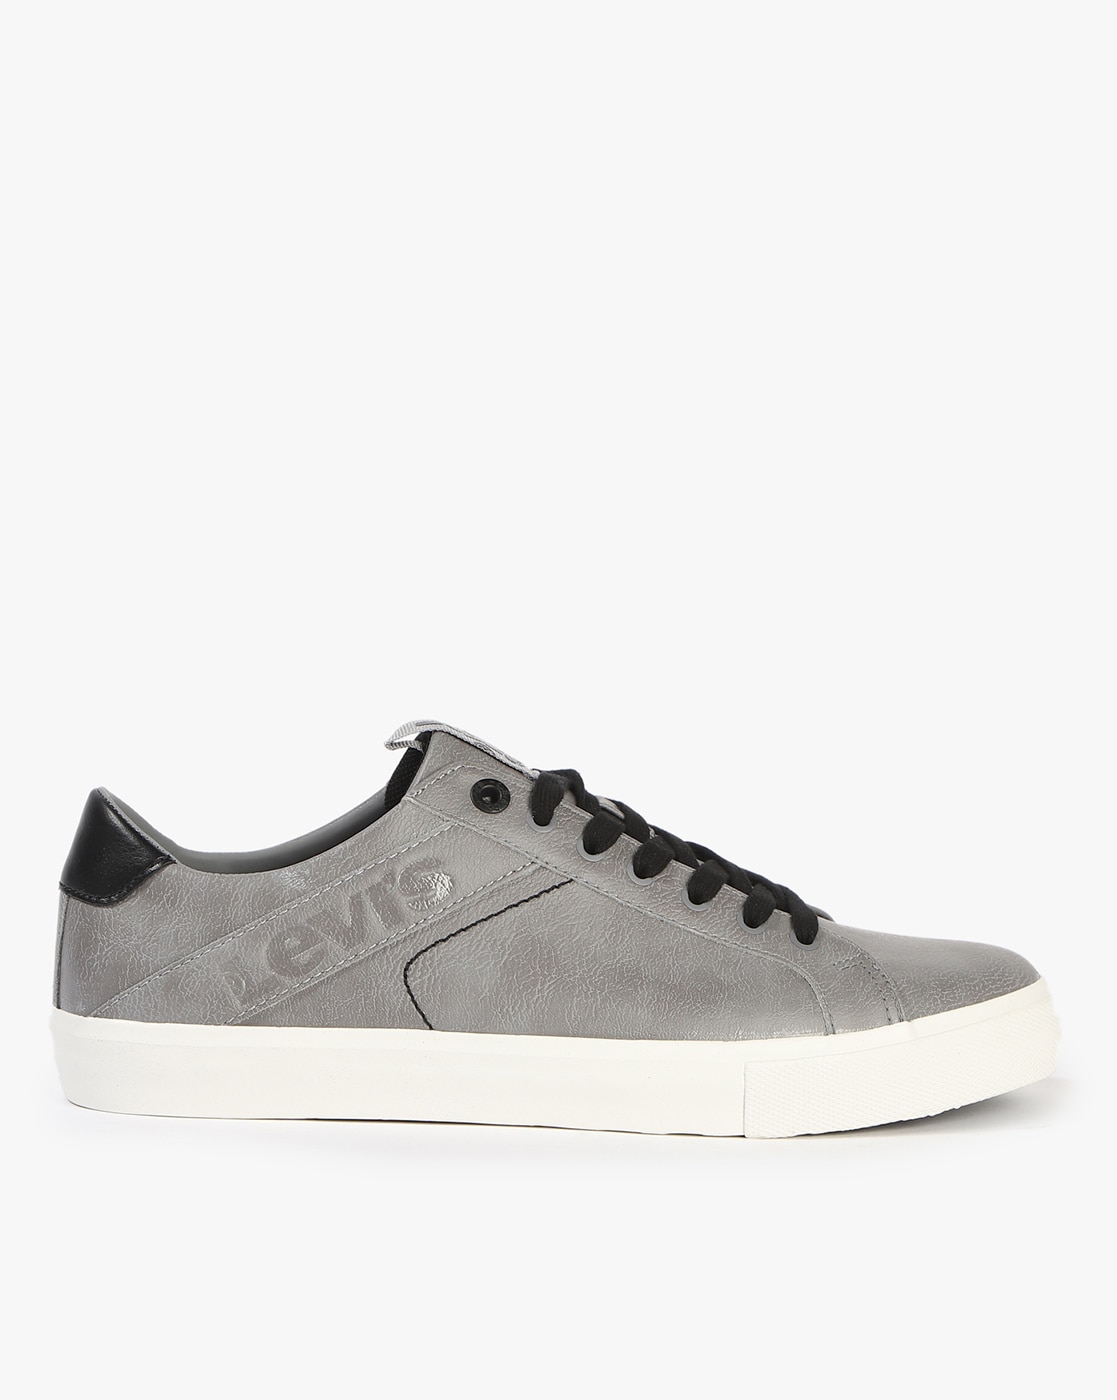 Buy Grey Sneakers for Men by LEVIS Online 